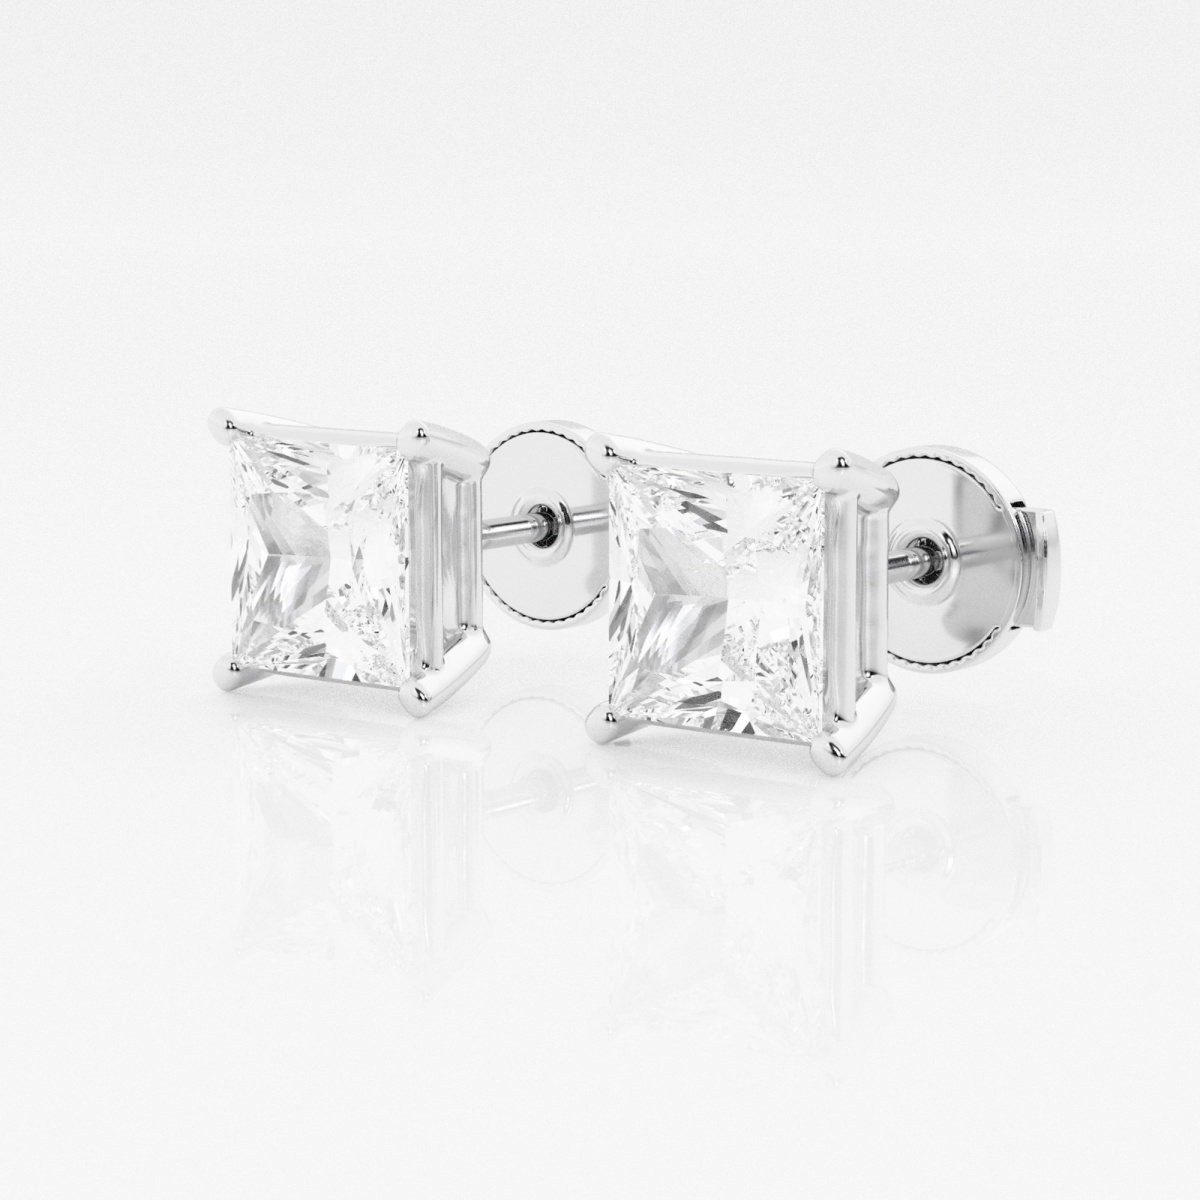 3 ctw Princess Lab Grown Diamond Solitaire Certified Stud Earrings